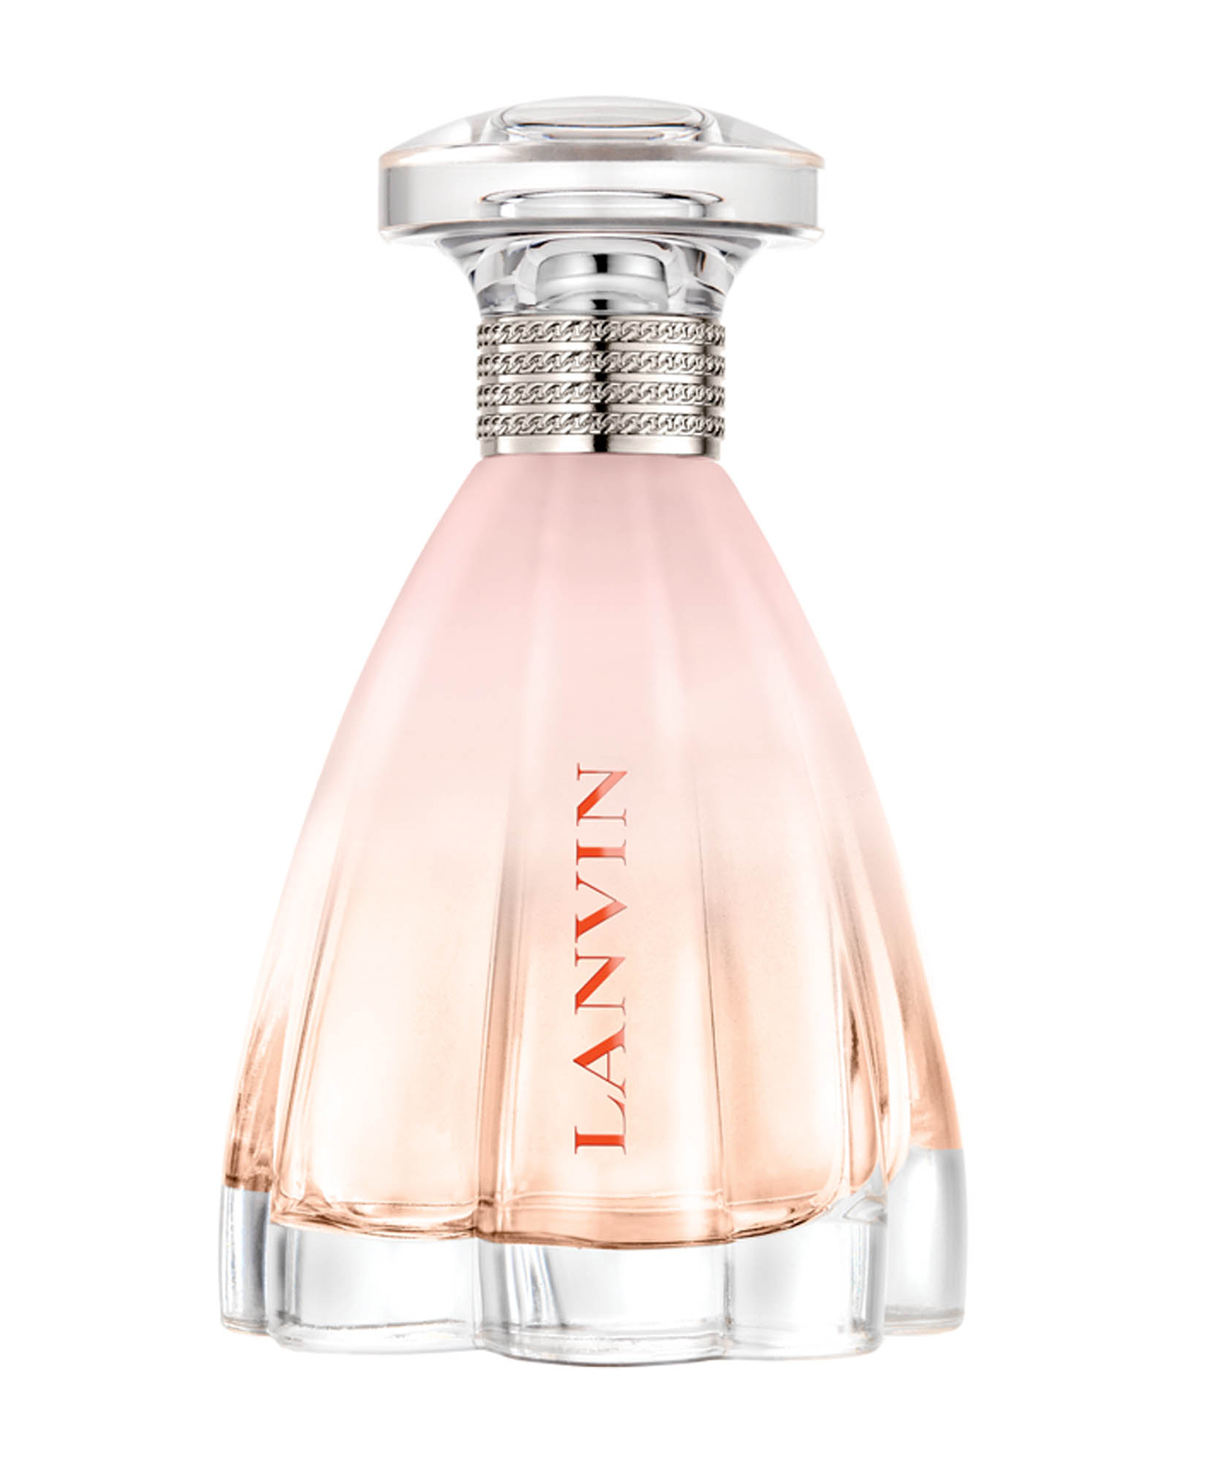 Perfume `Lanvin` Modern Princess Eau Sensuelle